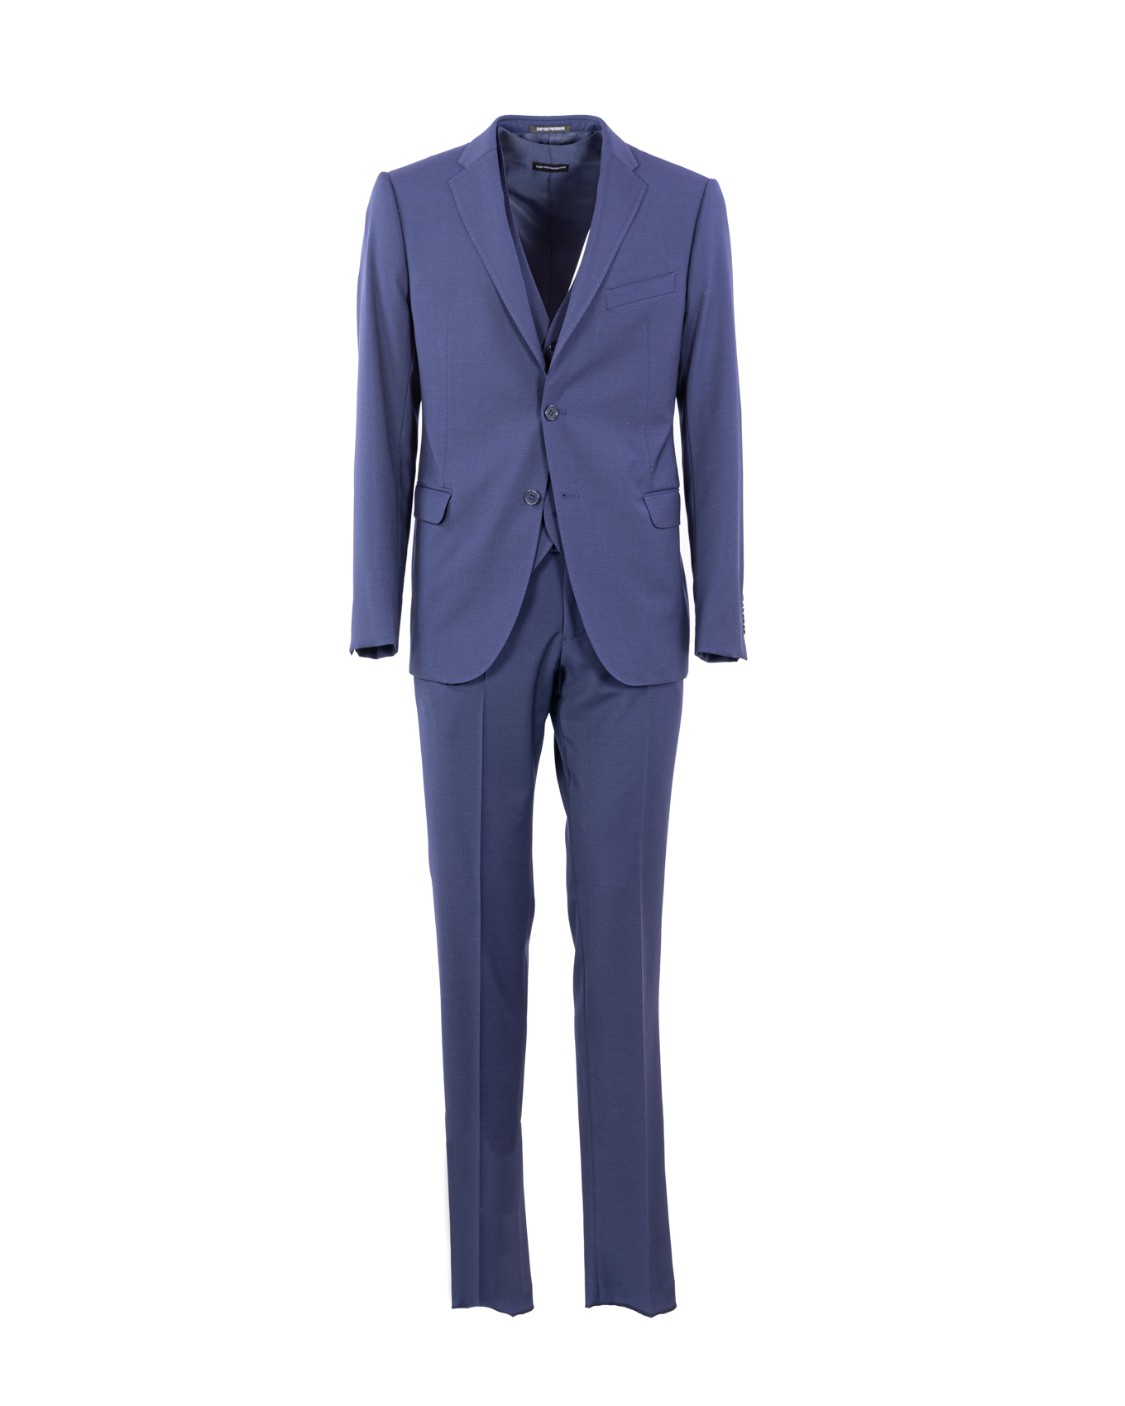 shop EMPORIO ARMANI  Abito: Emporio Armani abito blu con gilet.
Slim fit.
Due bottoni.
Due spacchi posteriori.
Composizione: 100% lana.
Fabbricato in Bulgaria.. D41YMT 01504-916 number 3062977